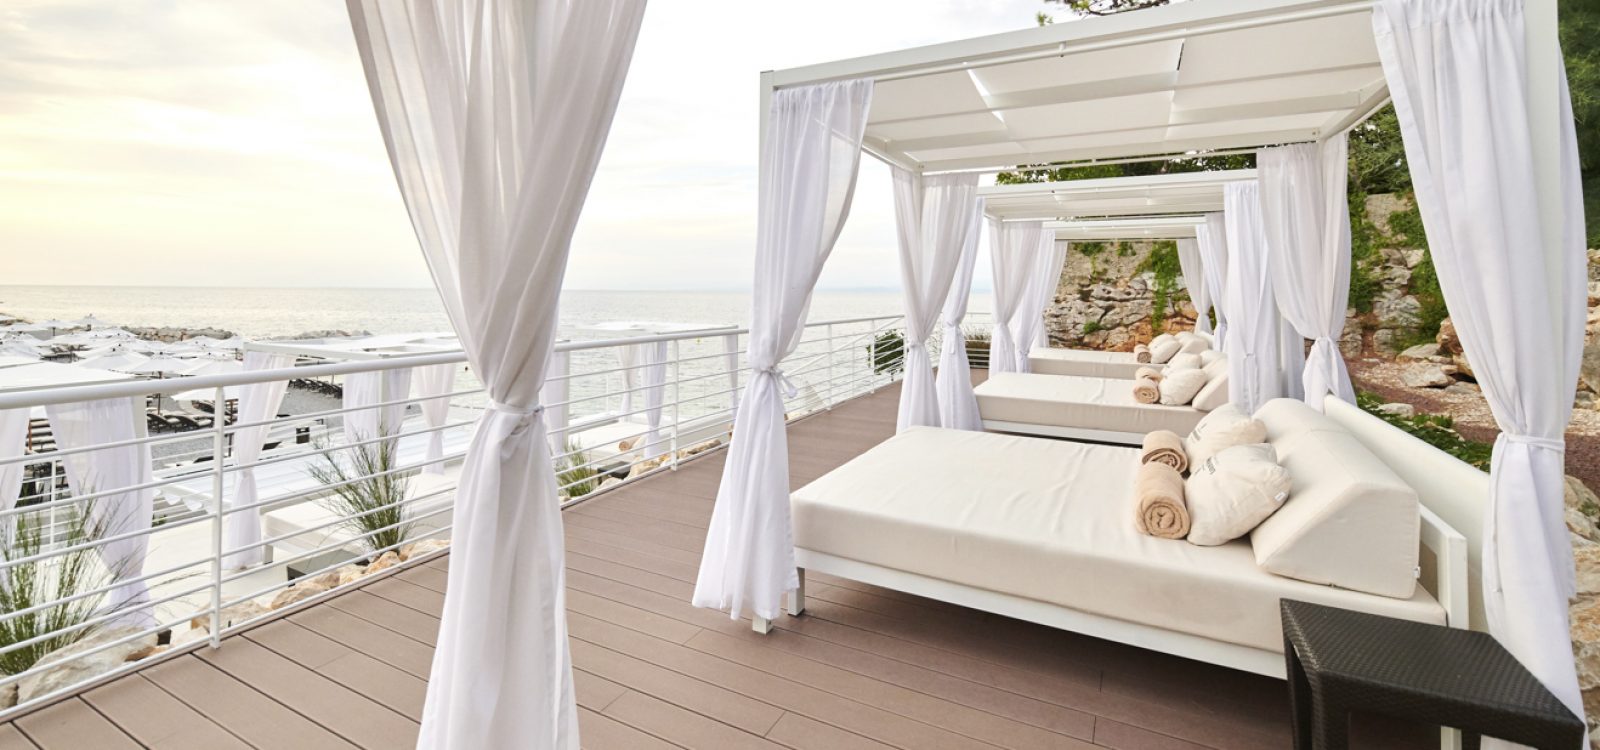 Kempinski Hotel Adriatic beach cabanas-WEB